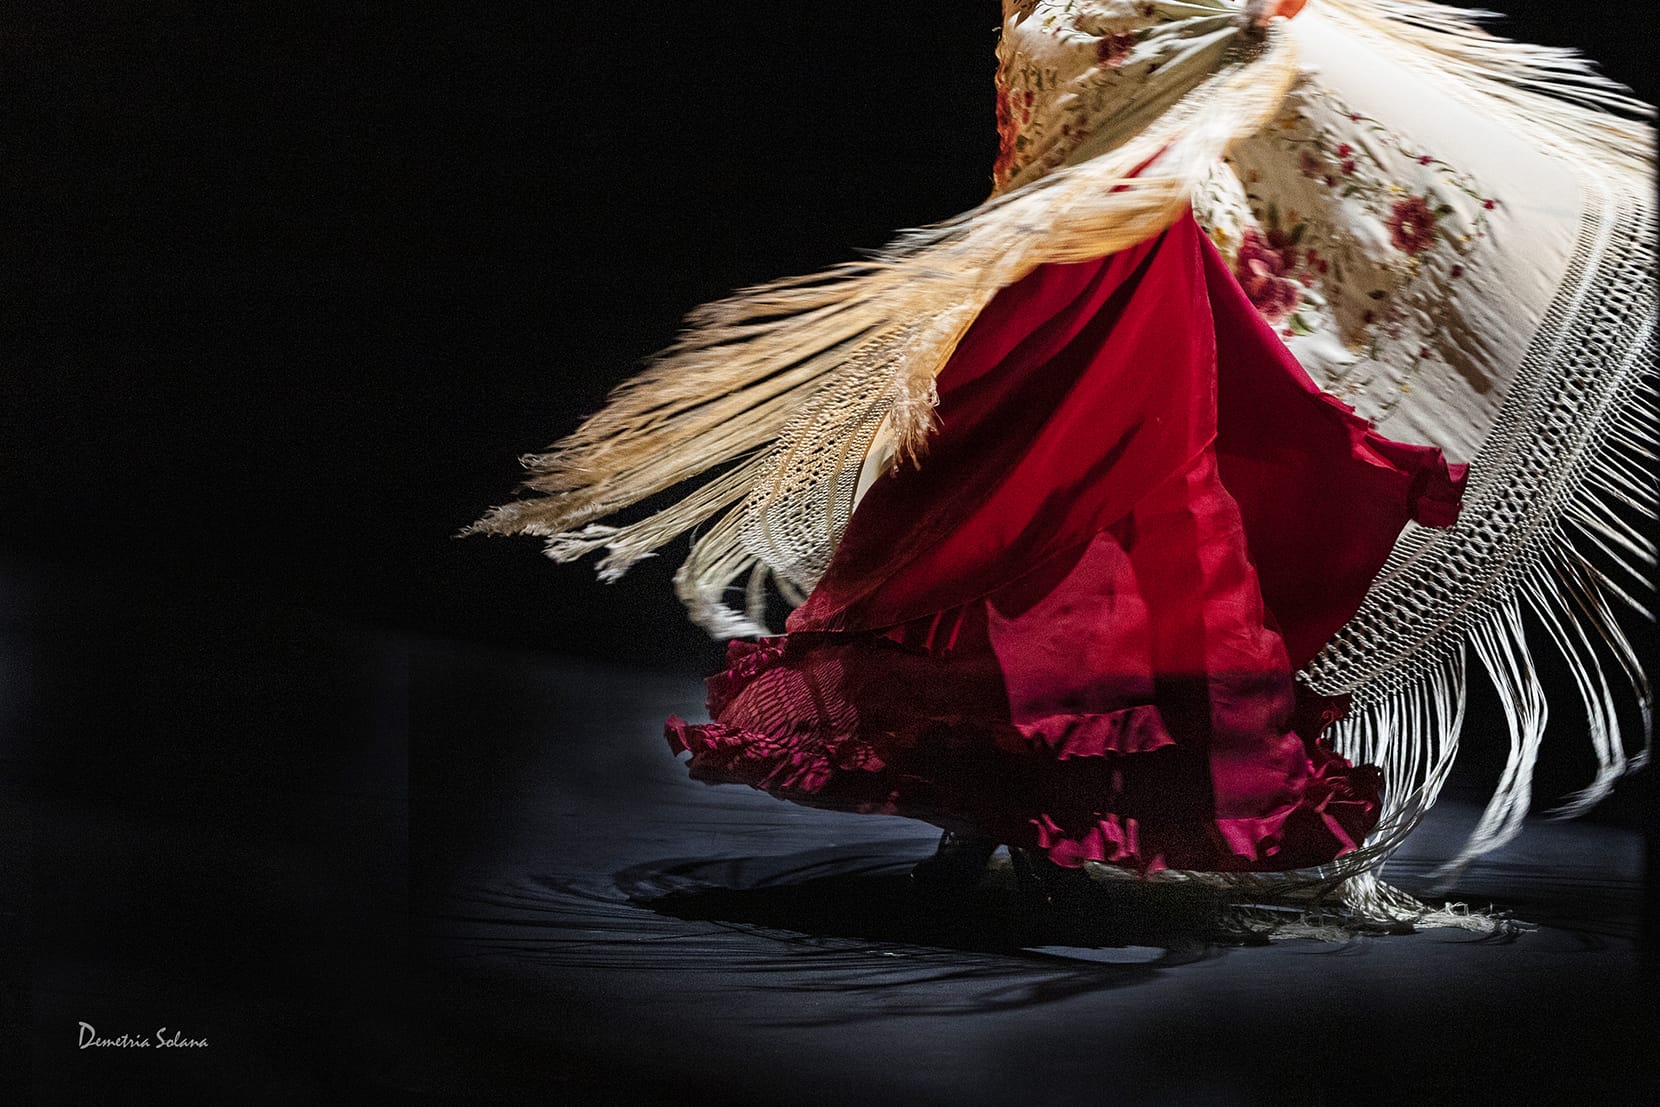 16 de noviembre, Día Internacional del Flamenco, con múltiples actividades en vivo